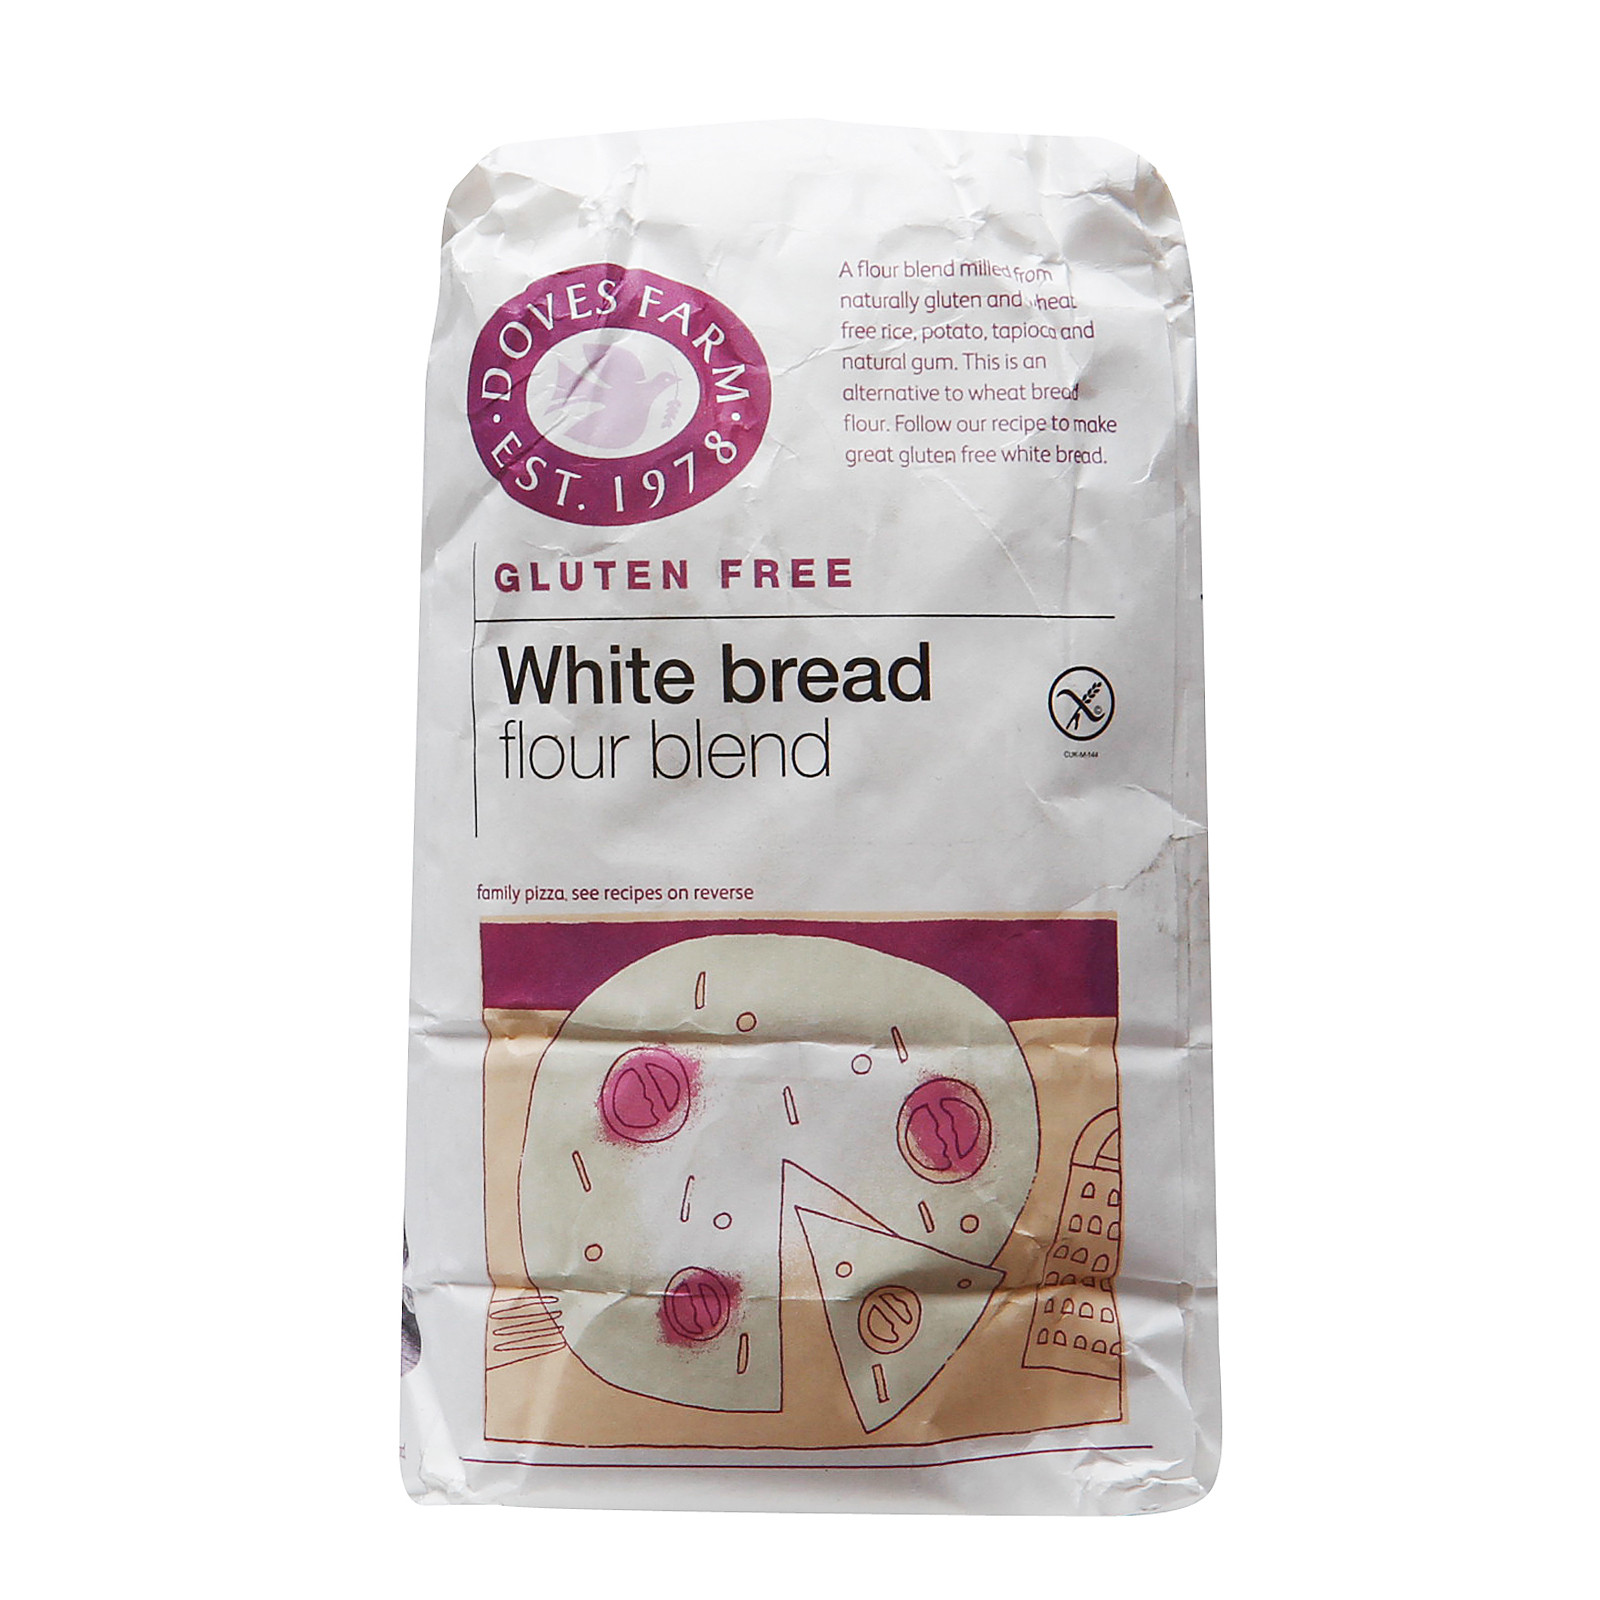 Gluten Free Bread Flour Blend
 Doves Farm Gluten Free White Bread Flour Blend 1kg from